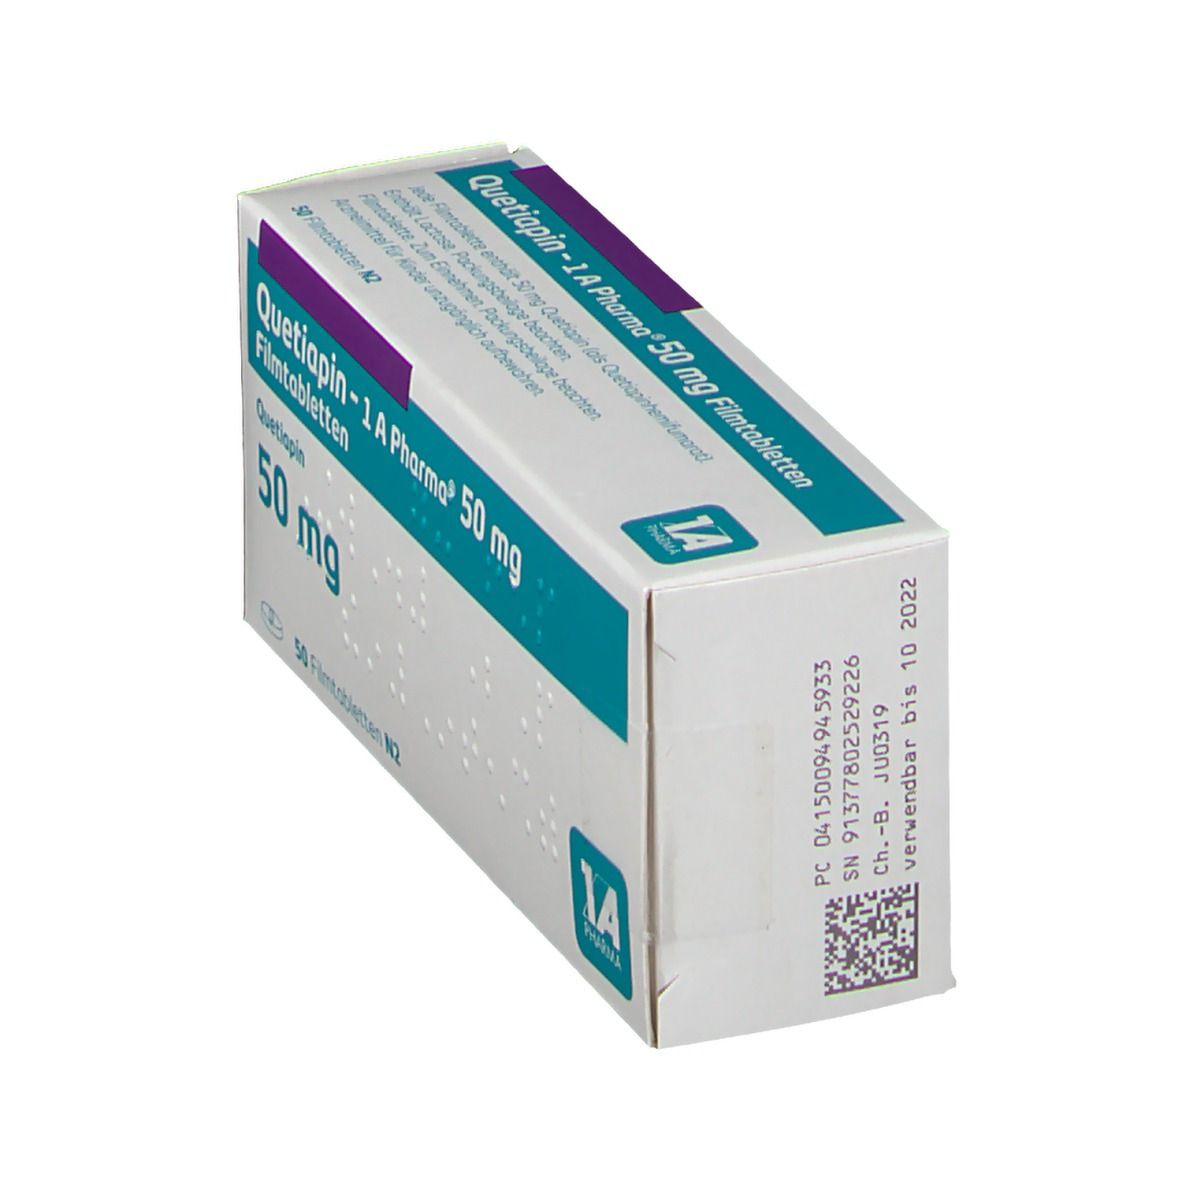 Quetiapin 1A Pharma® 50Mg